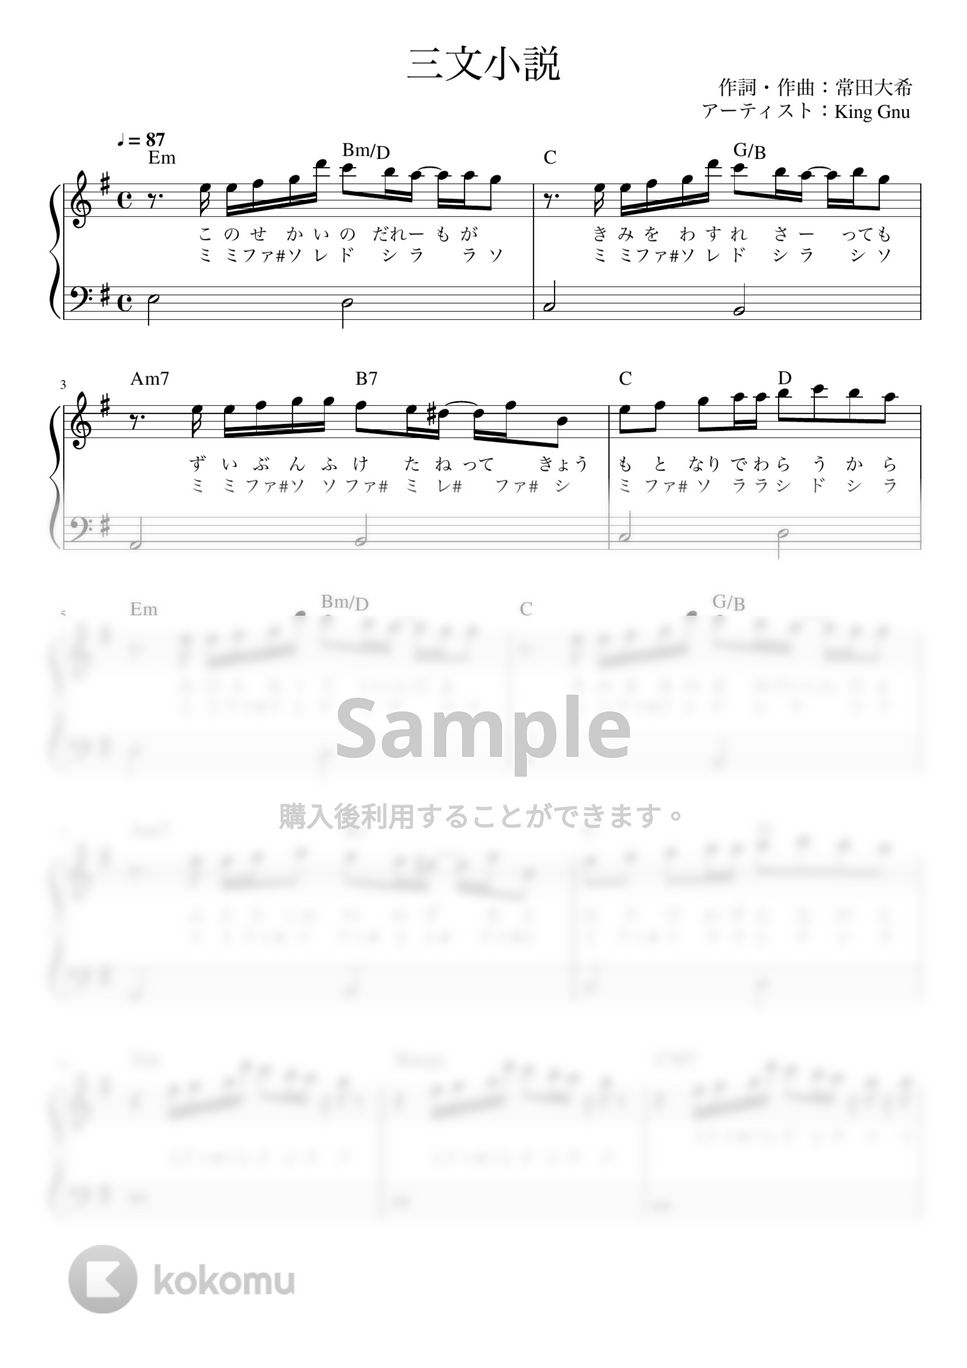 King Gnu - 三文小説 (ピアノ かんたん 歌詞付き ドレミ付き 初心者) by piano.tokyo